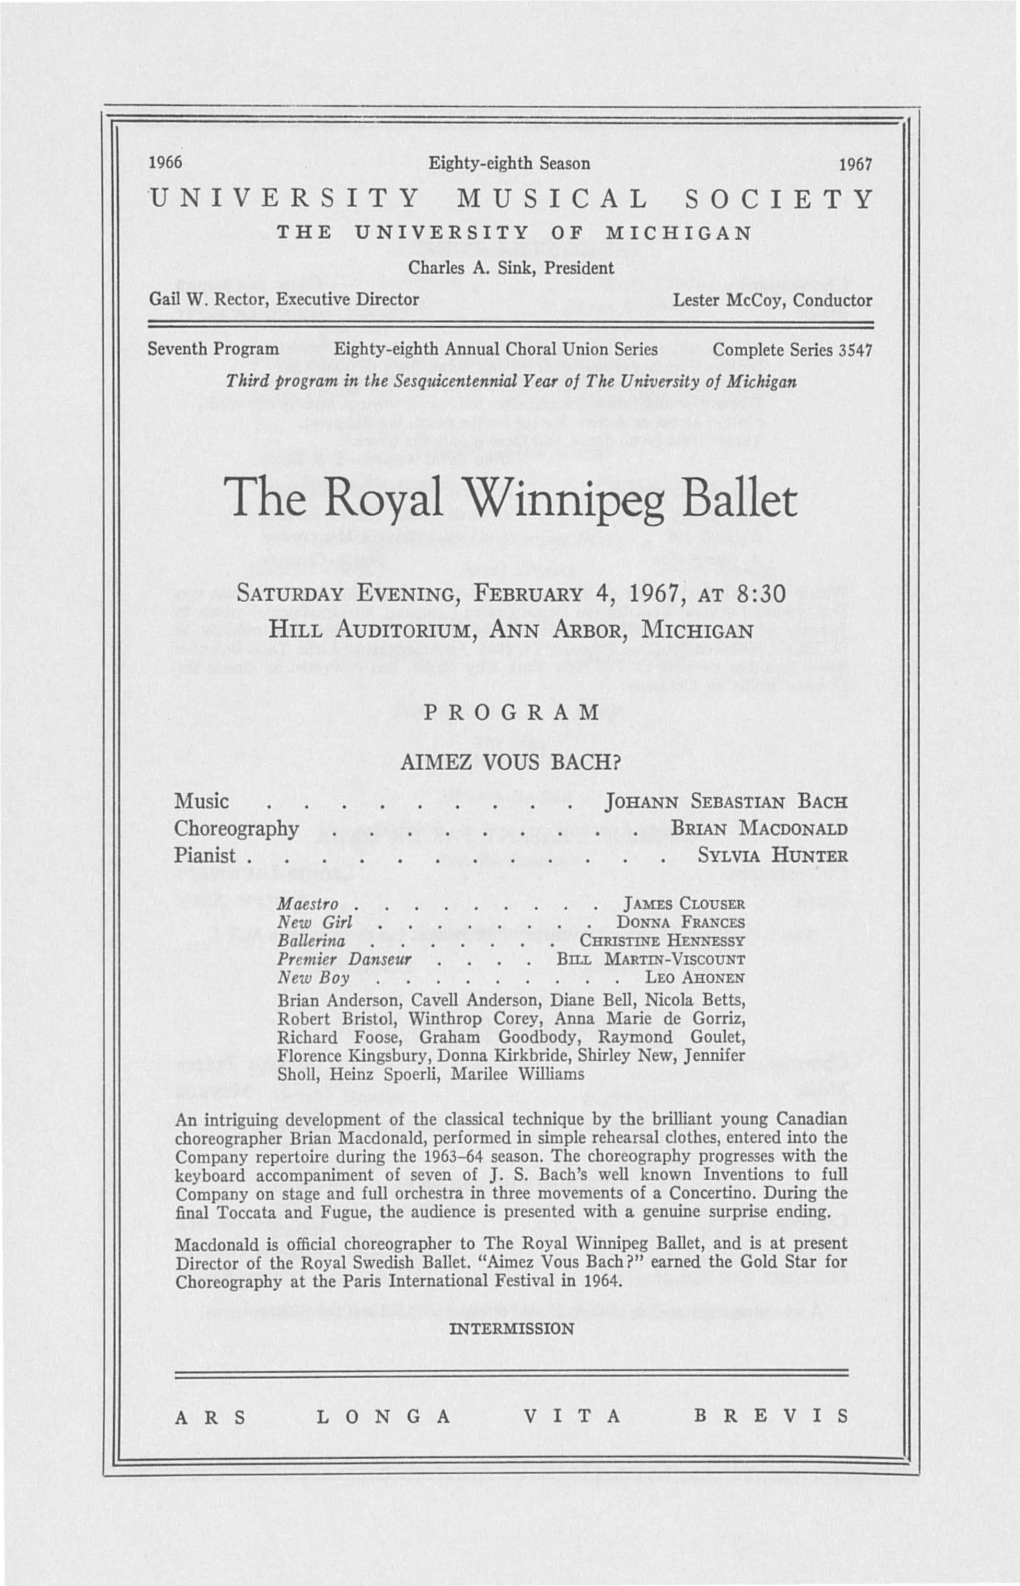 The Royal Winnipeg Ballet